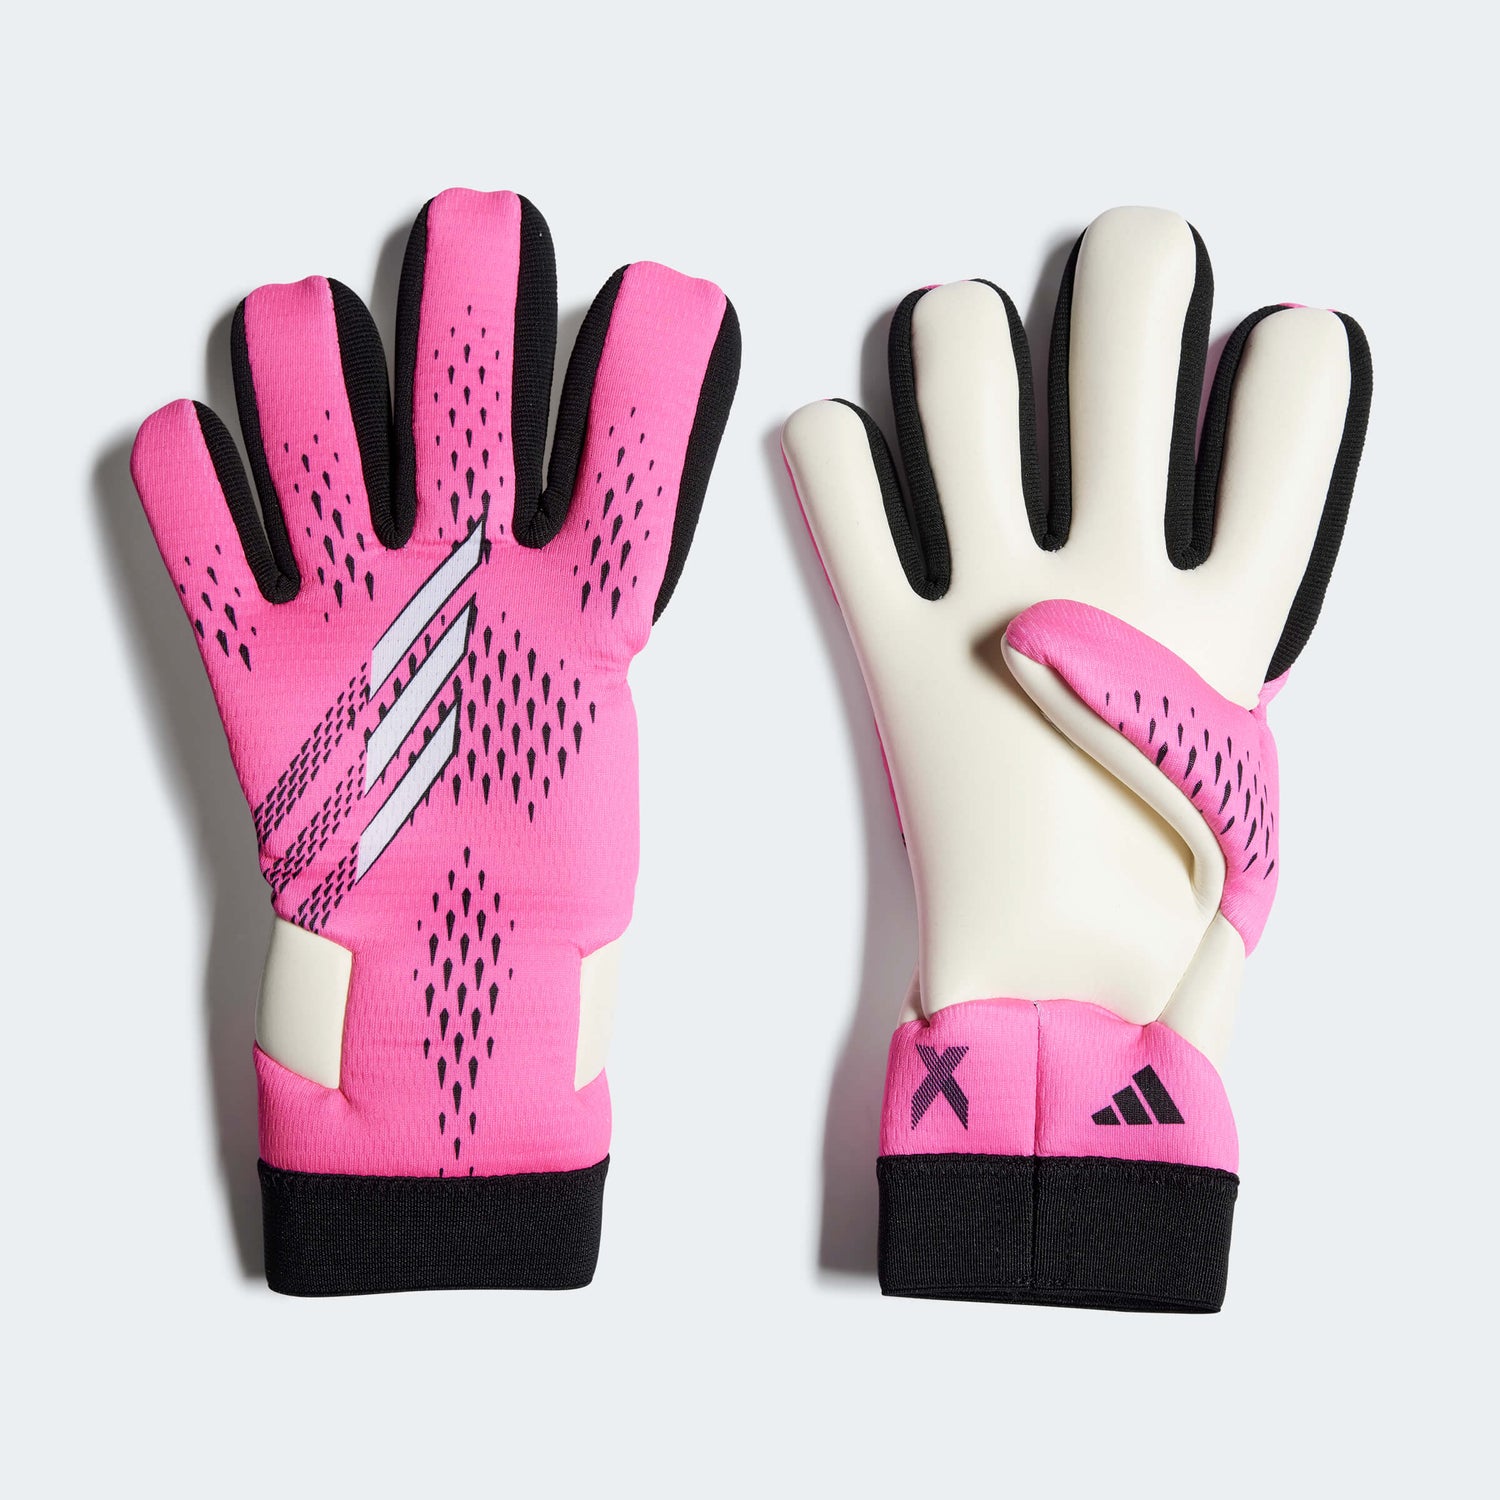 adidas Youth X League Goalkeeper Gloves - Pink-White-Black (Pair)